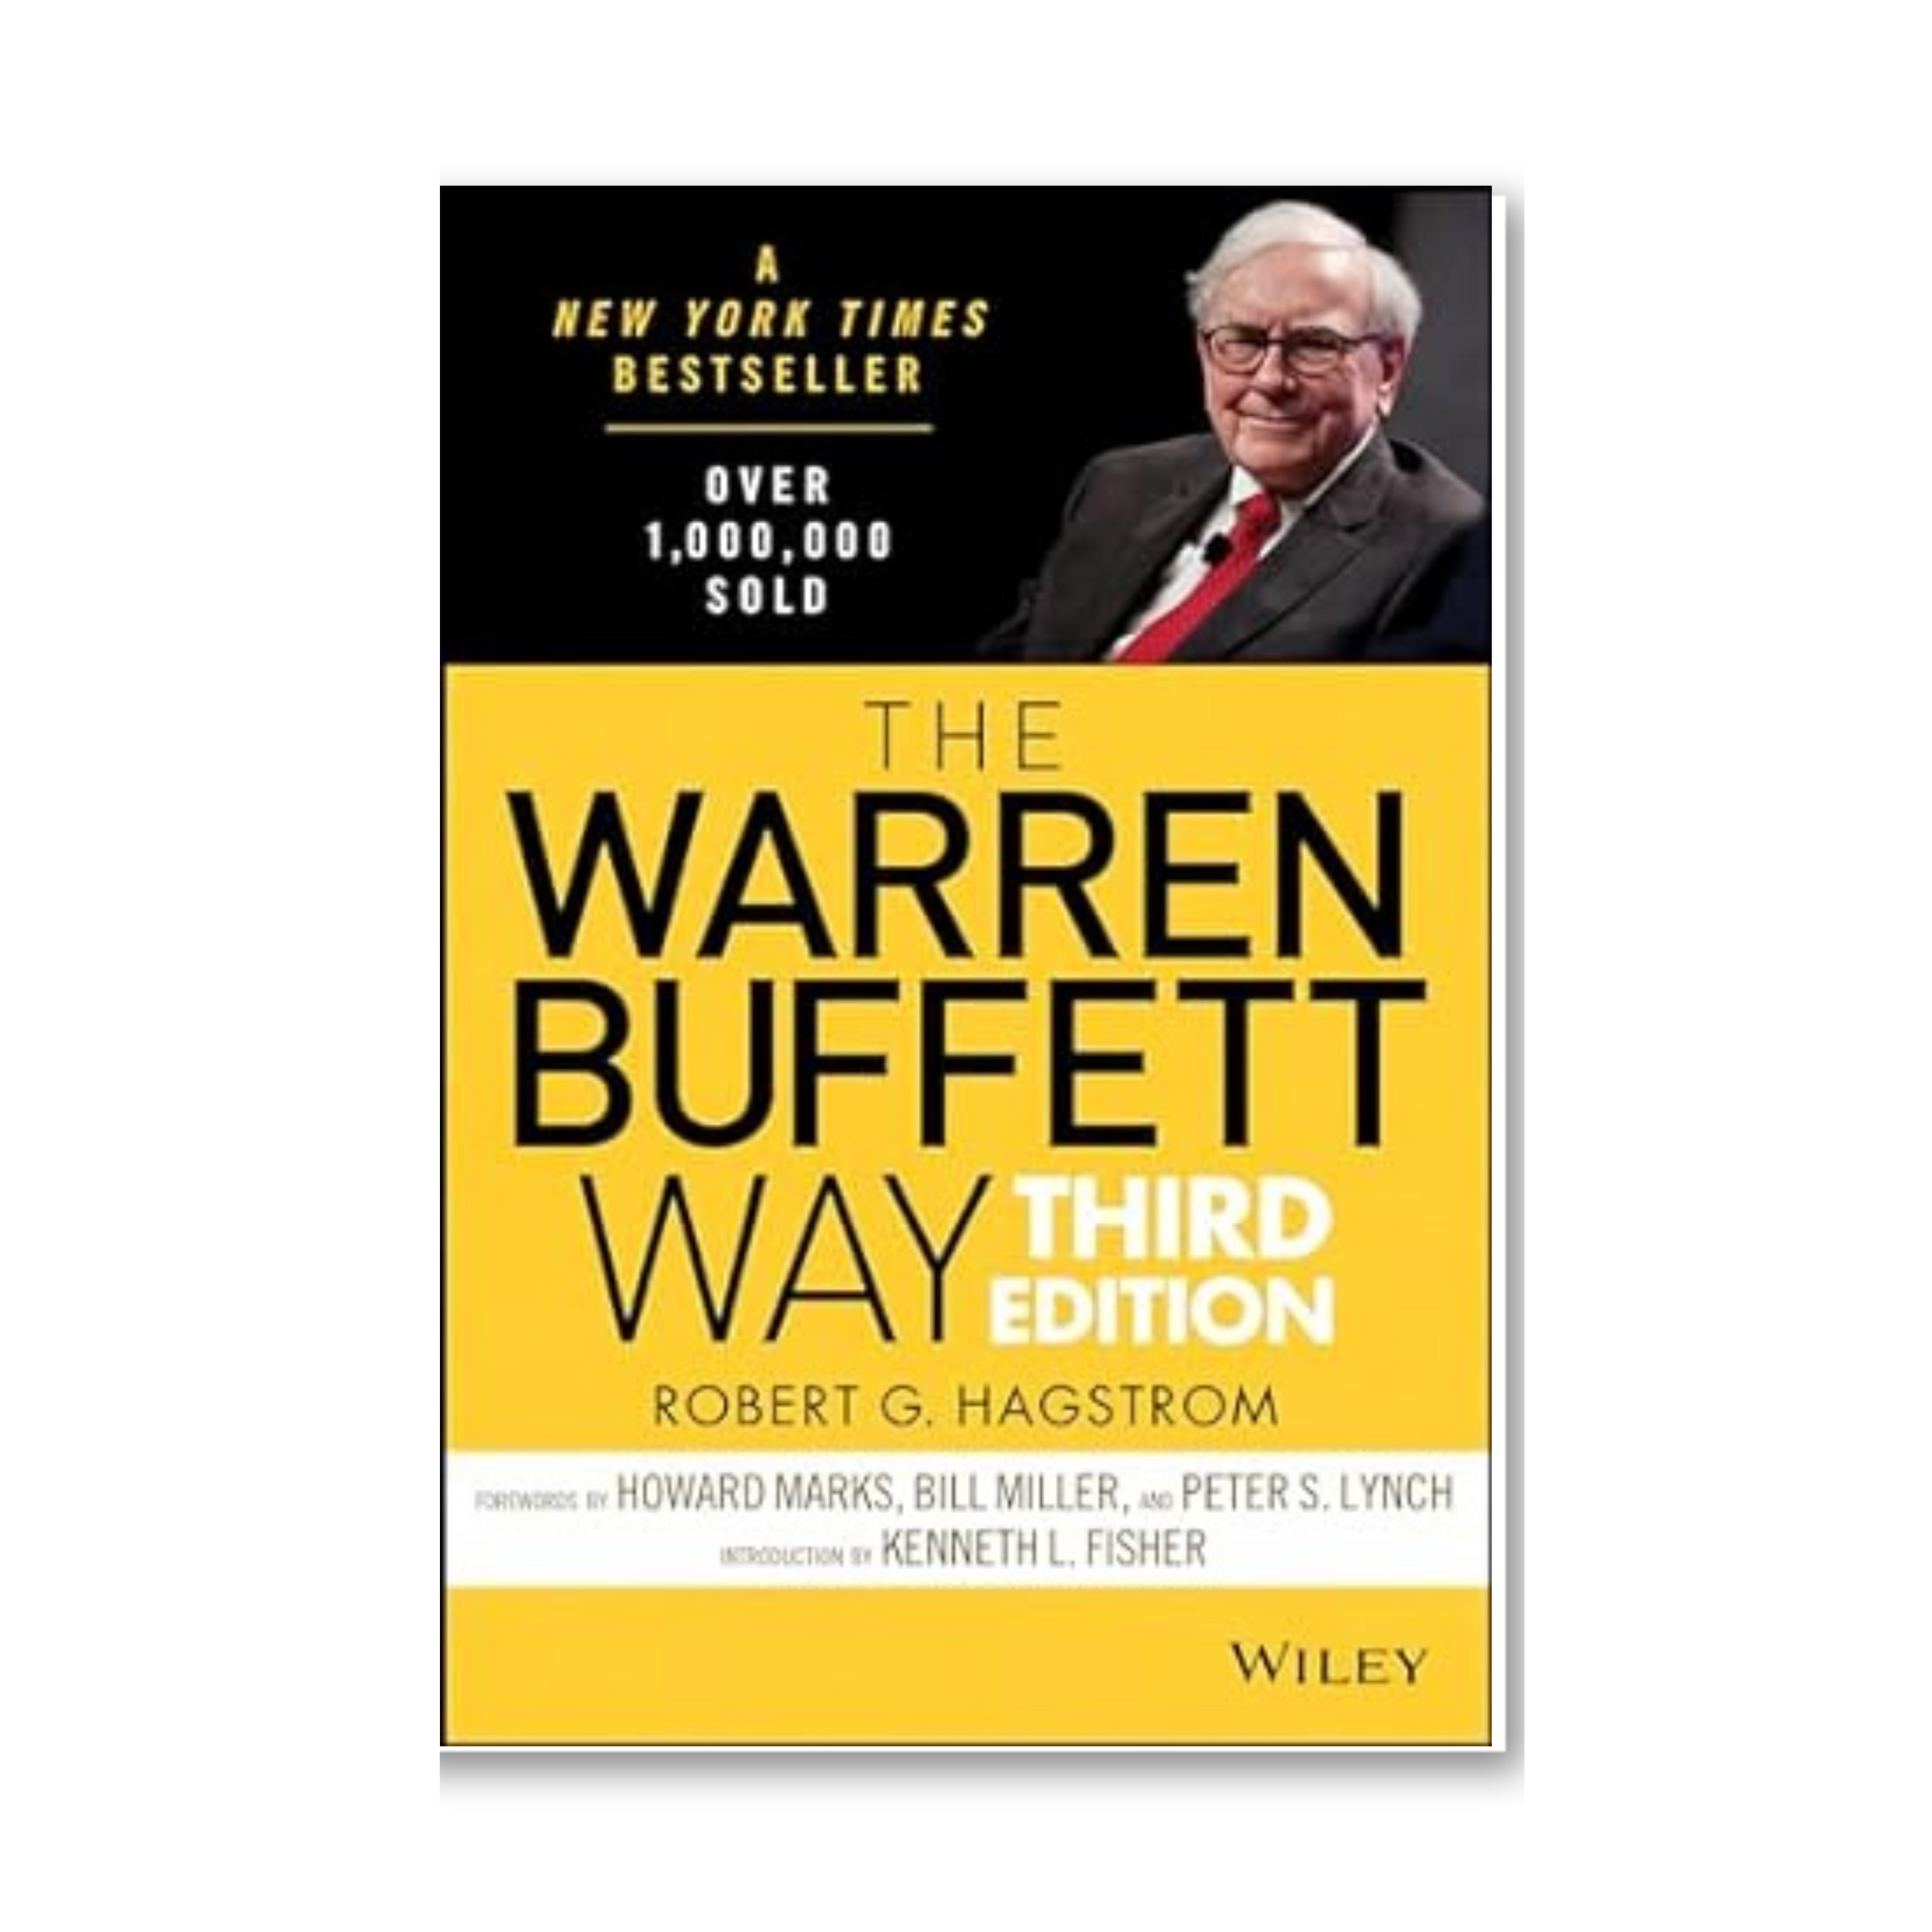 The Warren Buffet Way